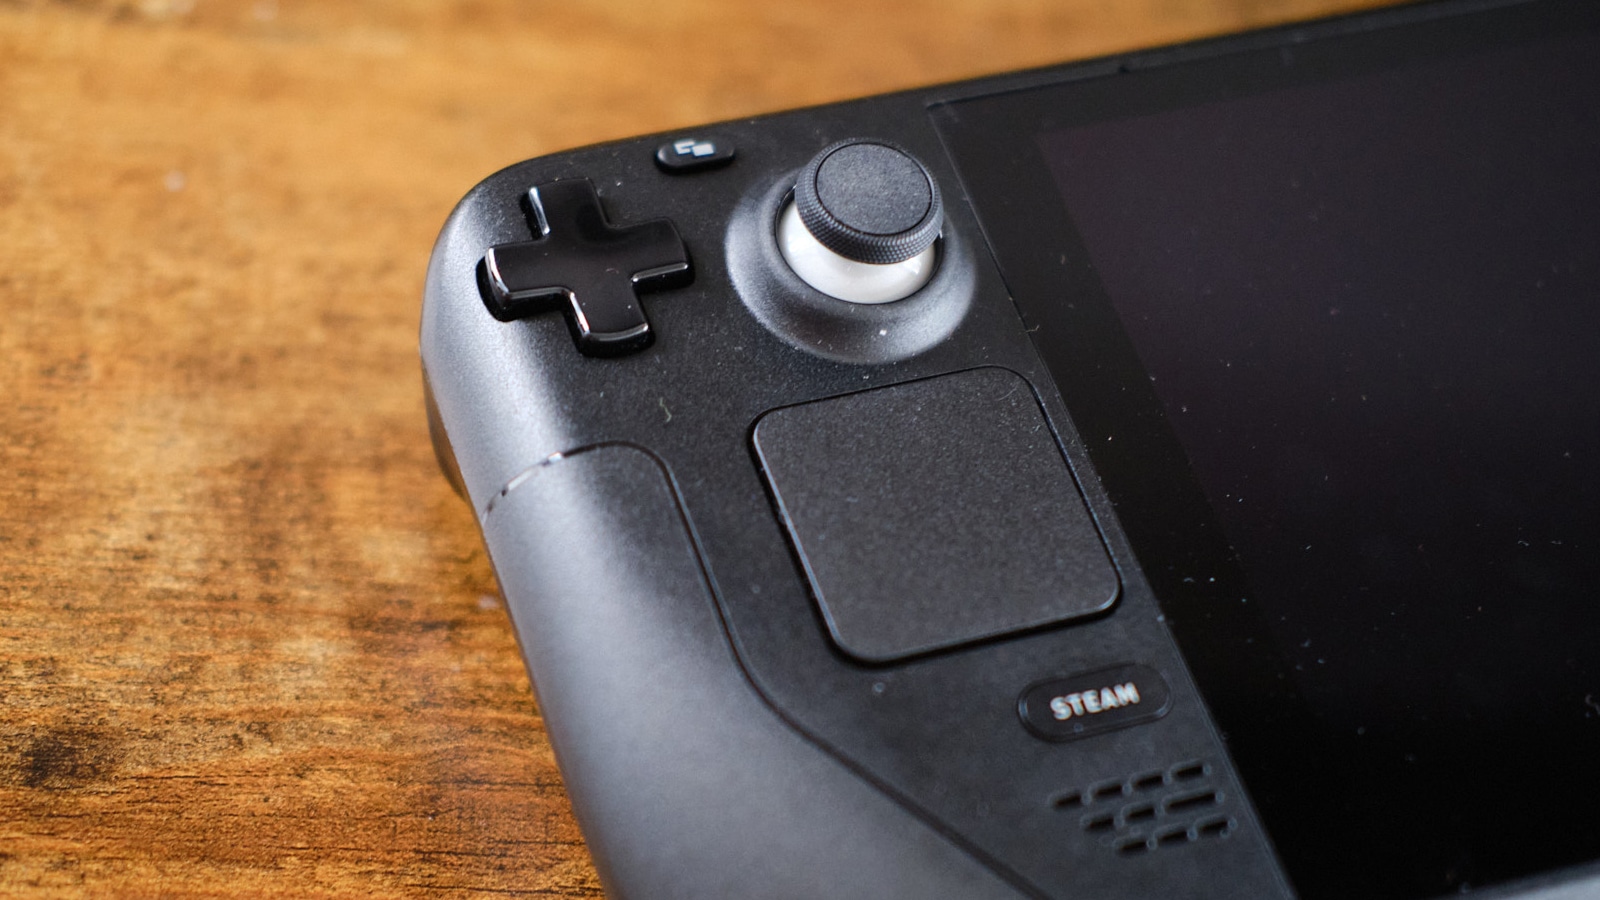 As Nintendo Switch 2 rumours swirl, Valve says no Steam Deck 2